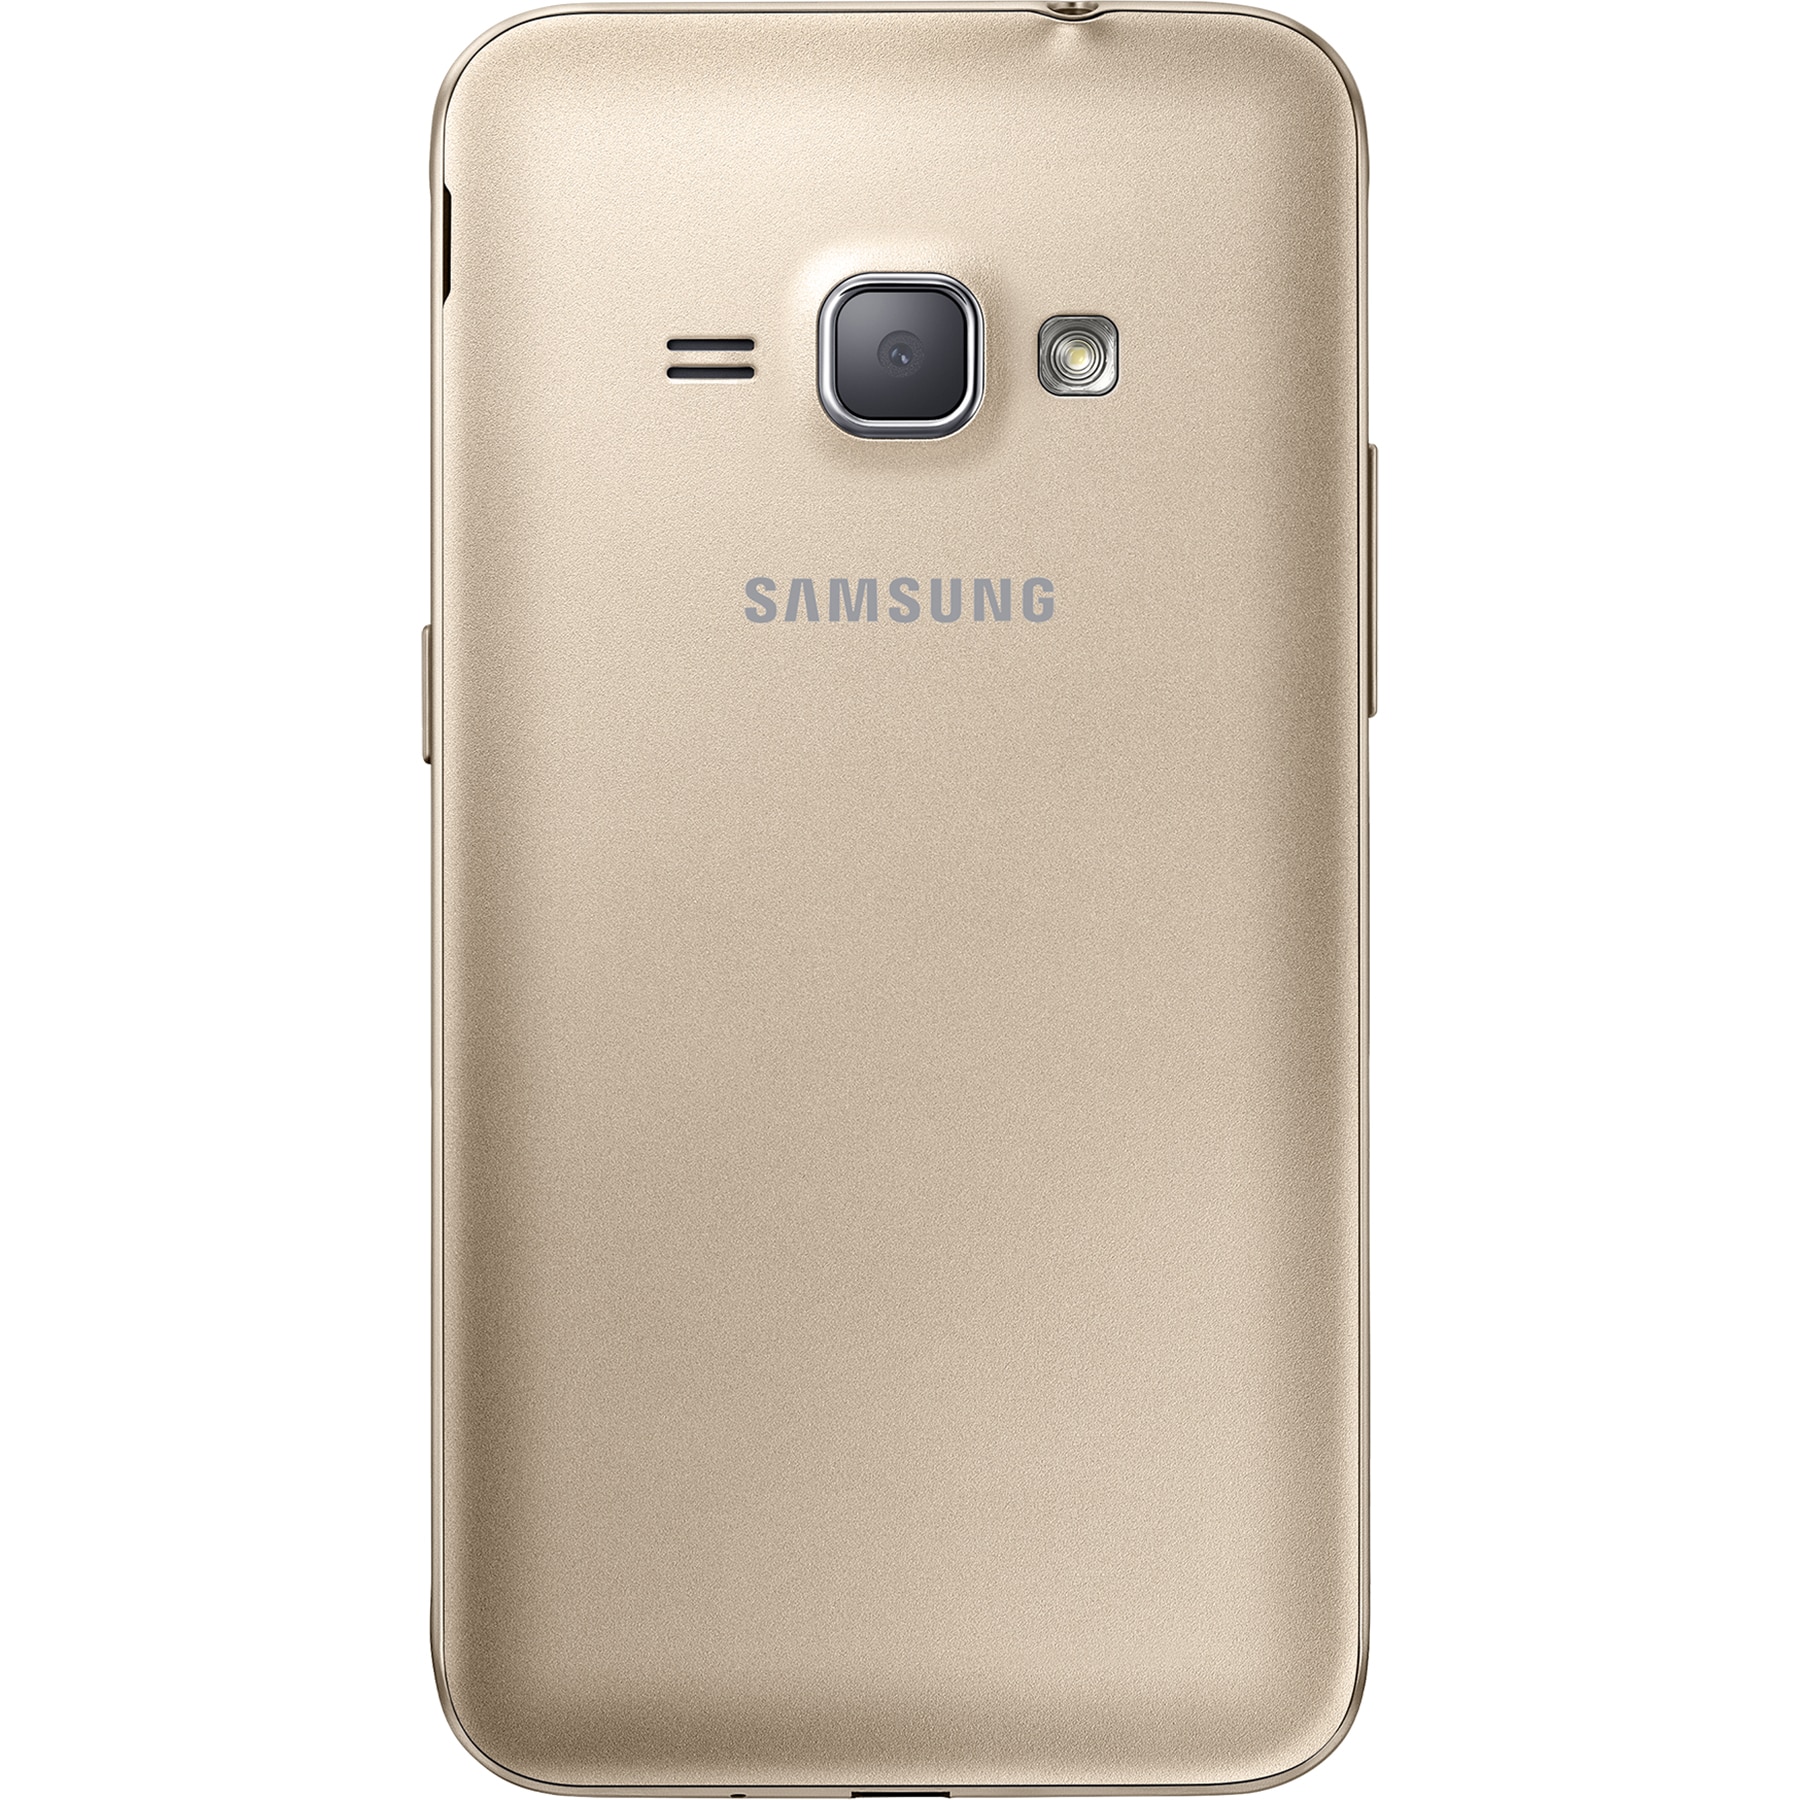 Samsung galaxy mini j105h. Samsung SM-j105h. Samsung Galaxy j1 Mini SM-j105h. Samsung j1 2016 Gold. Samsung Galaxy j1 Mini Duos.